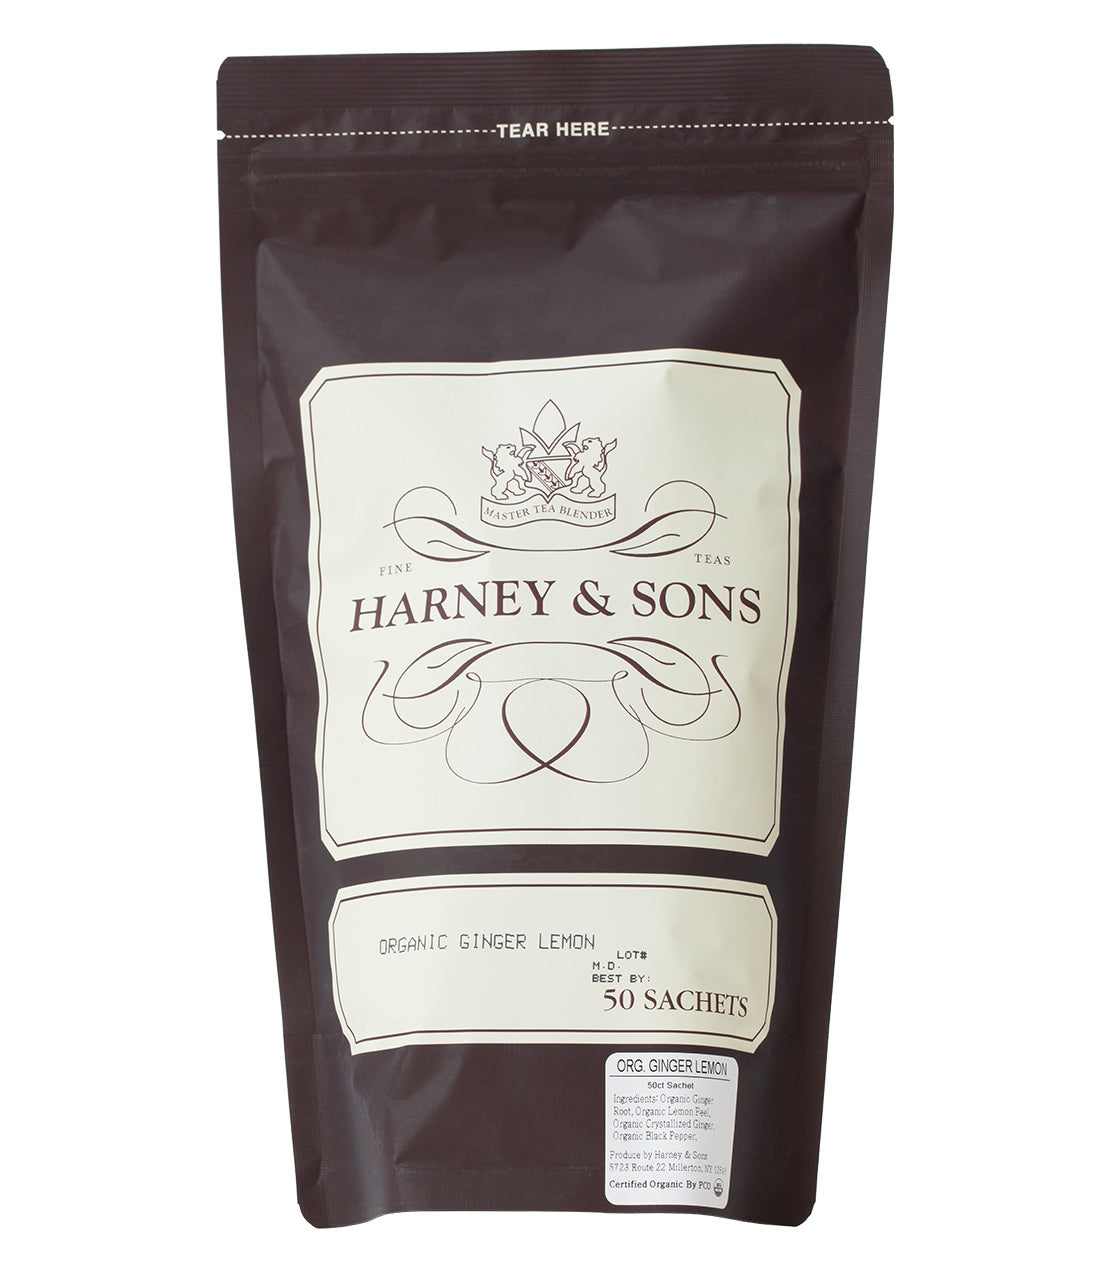 Organic Ginger Lemon, Bag of 50 Sachets - Sachets Bag of 50 Sachets - Harney & Sons Fine Teas